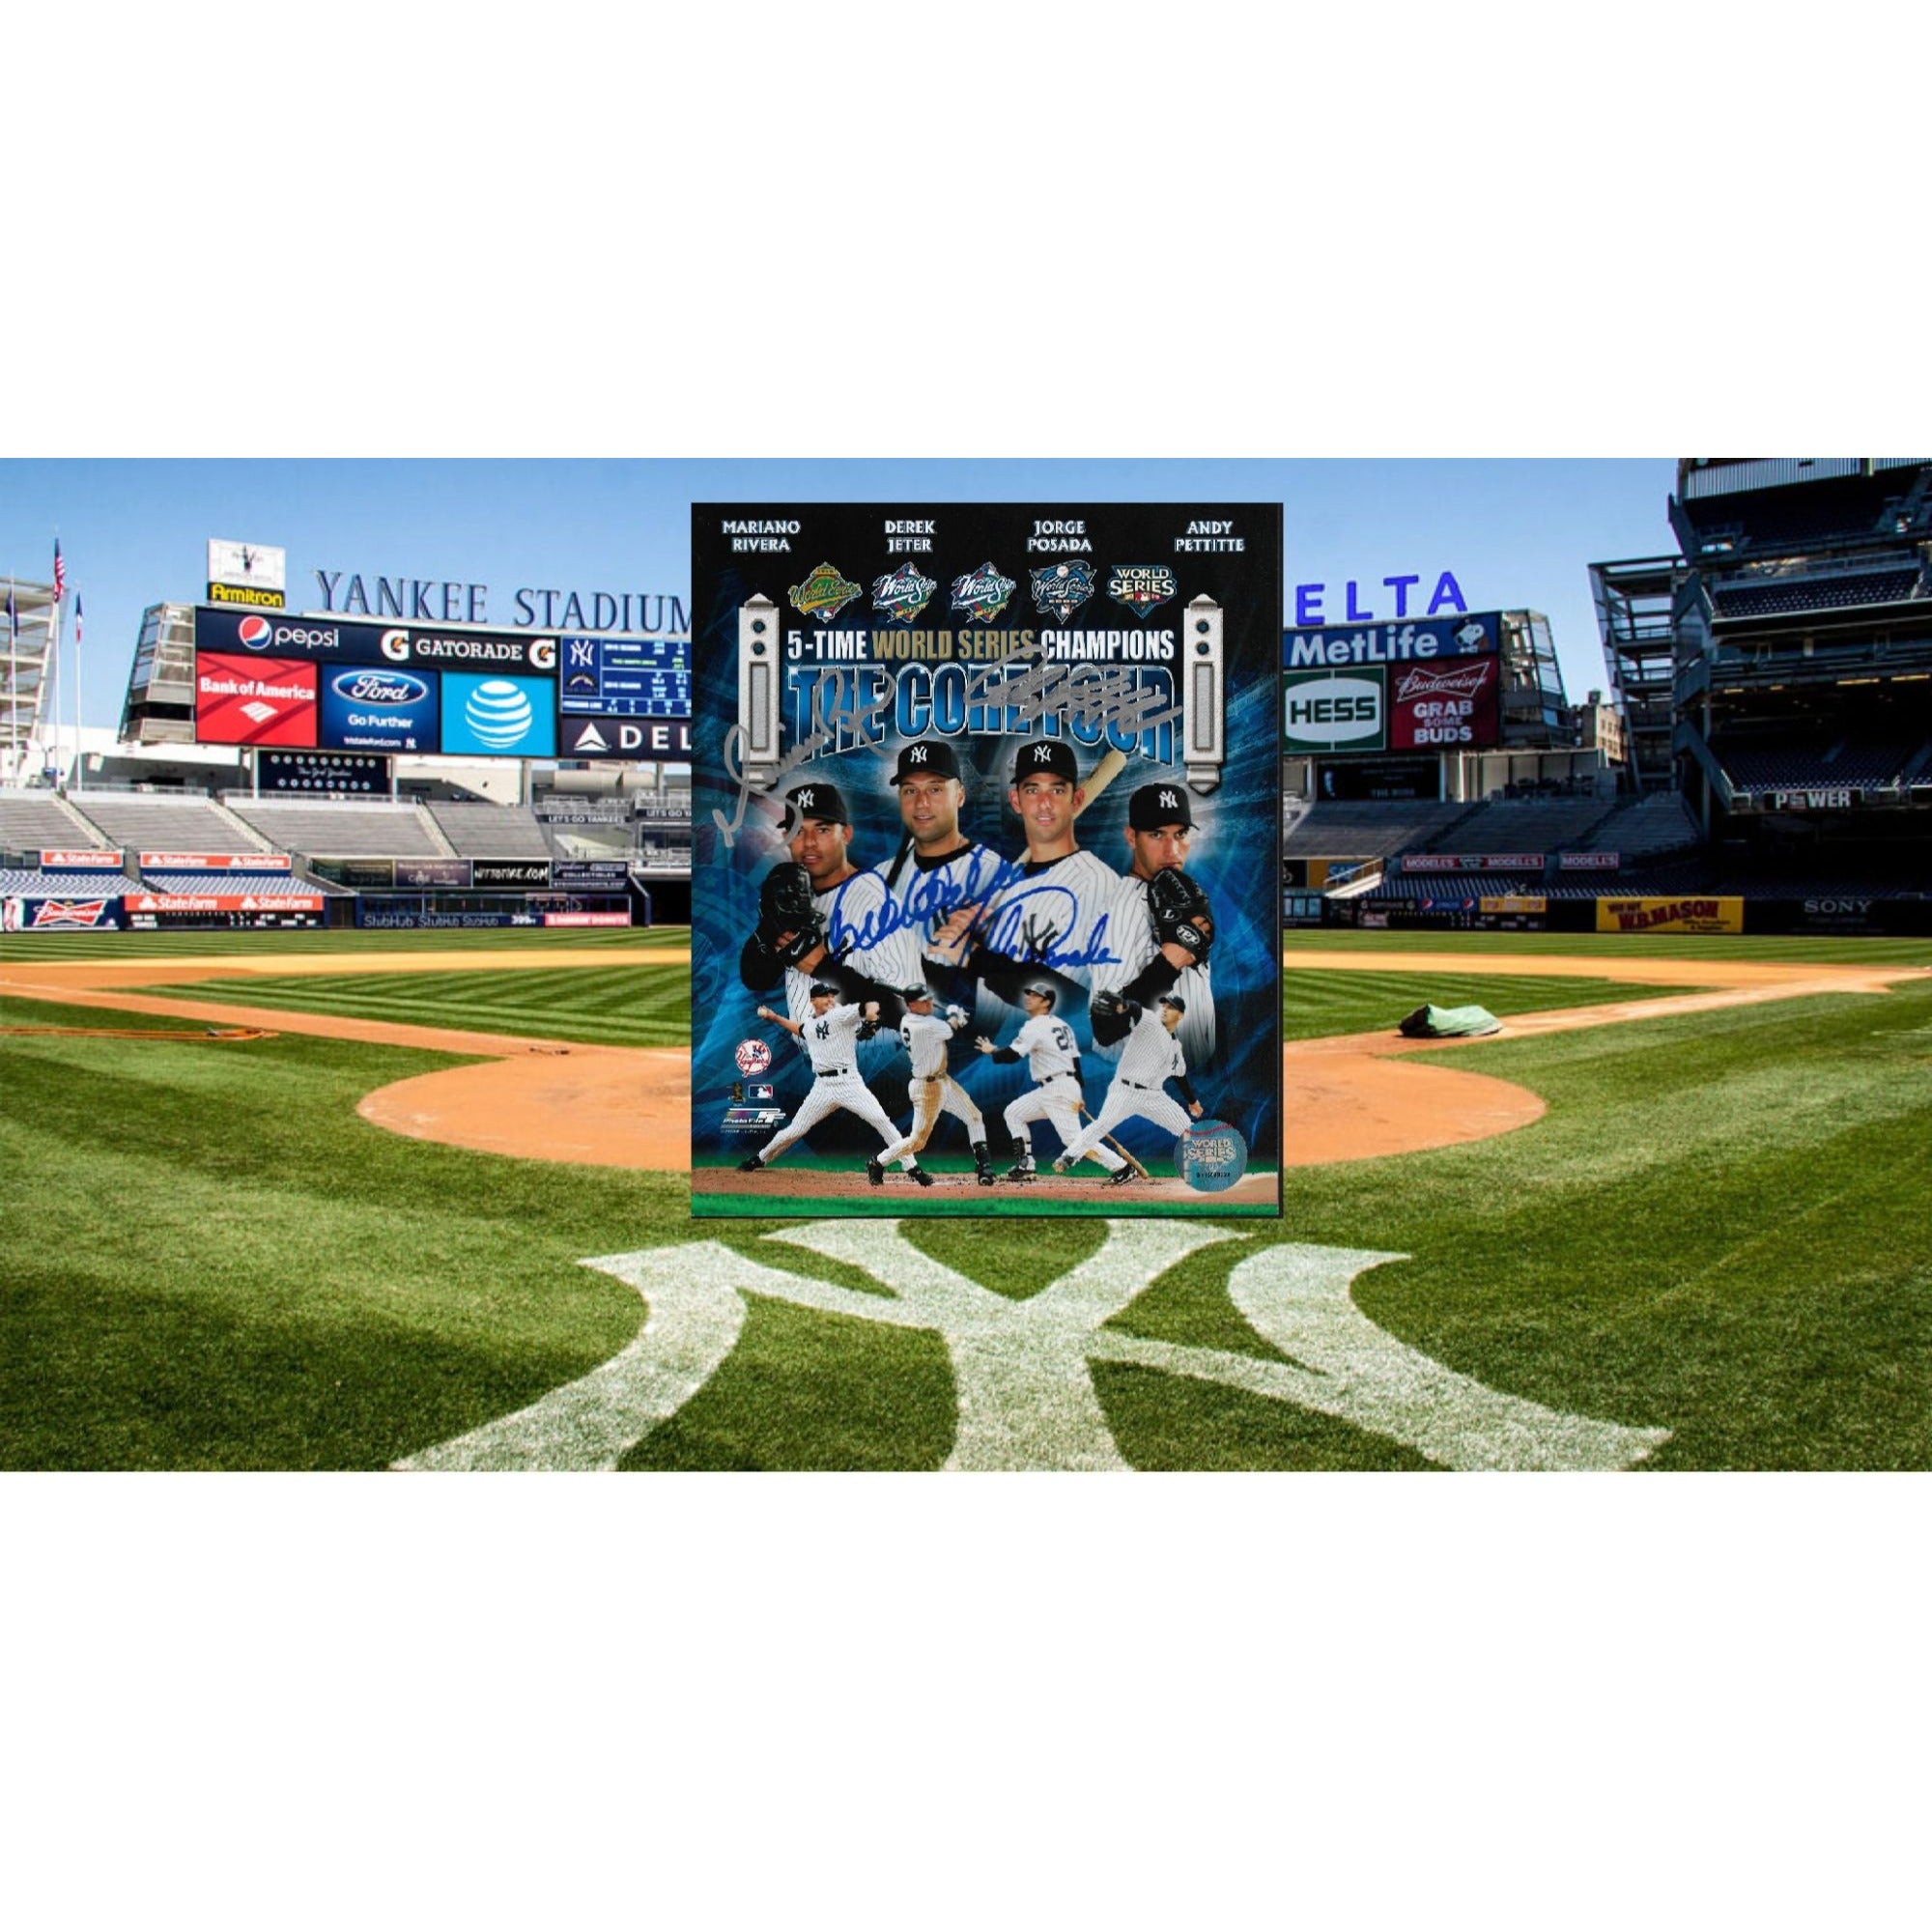 Official the Yankees Mariano Rivera Jorge Posada Andy Pettitte